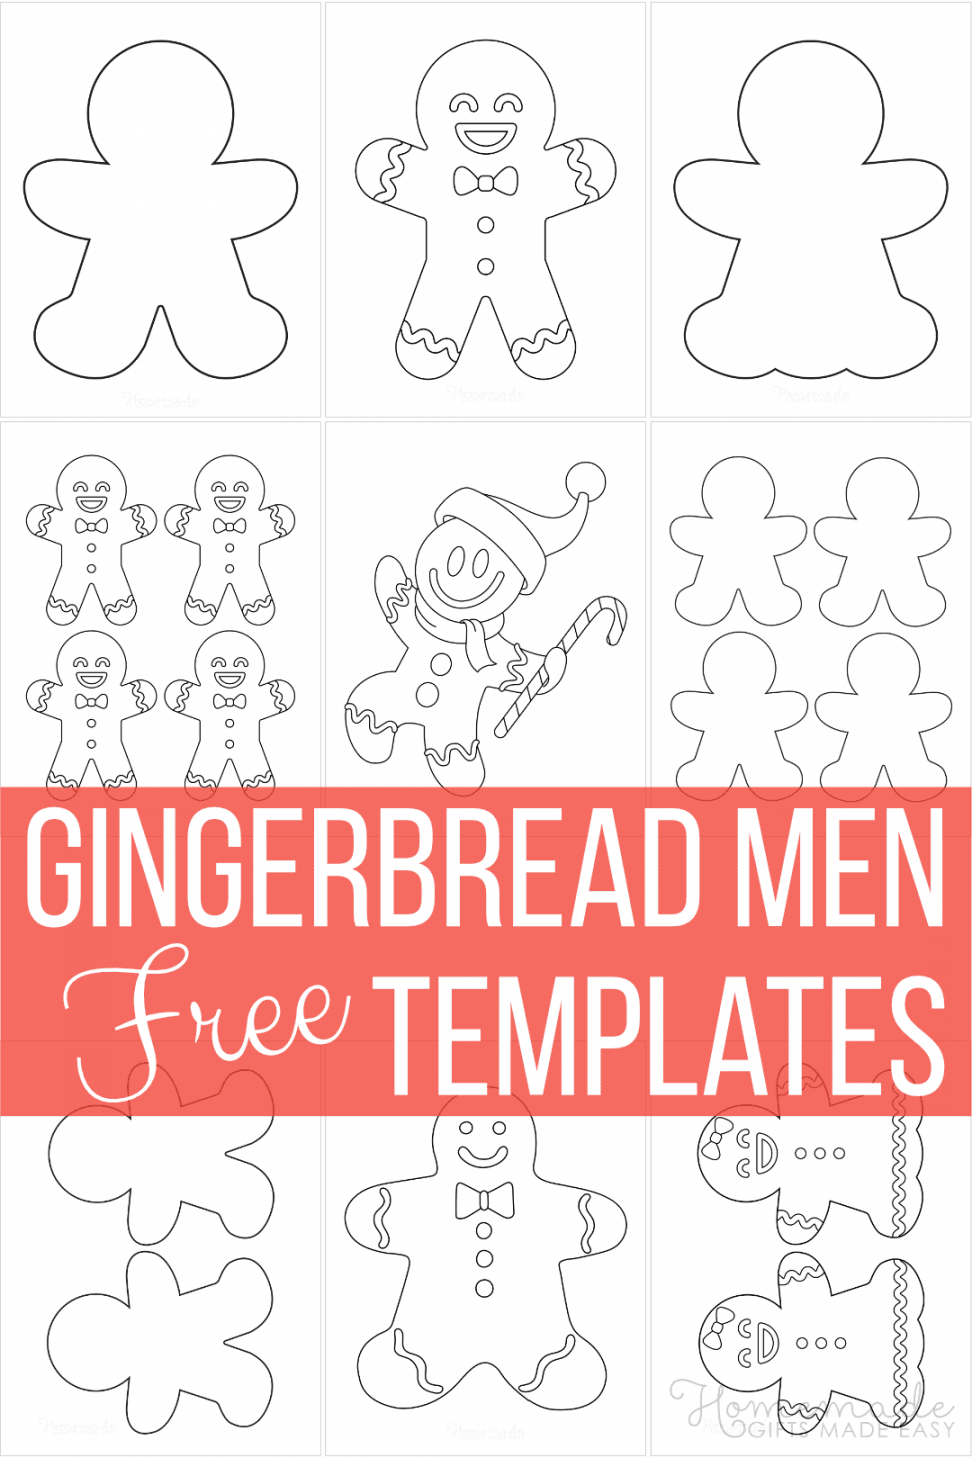 Free Printable Gingerbread Man Templates & Coloring Pages - FREE Printables - Gingerbread Man Template Pdf